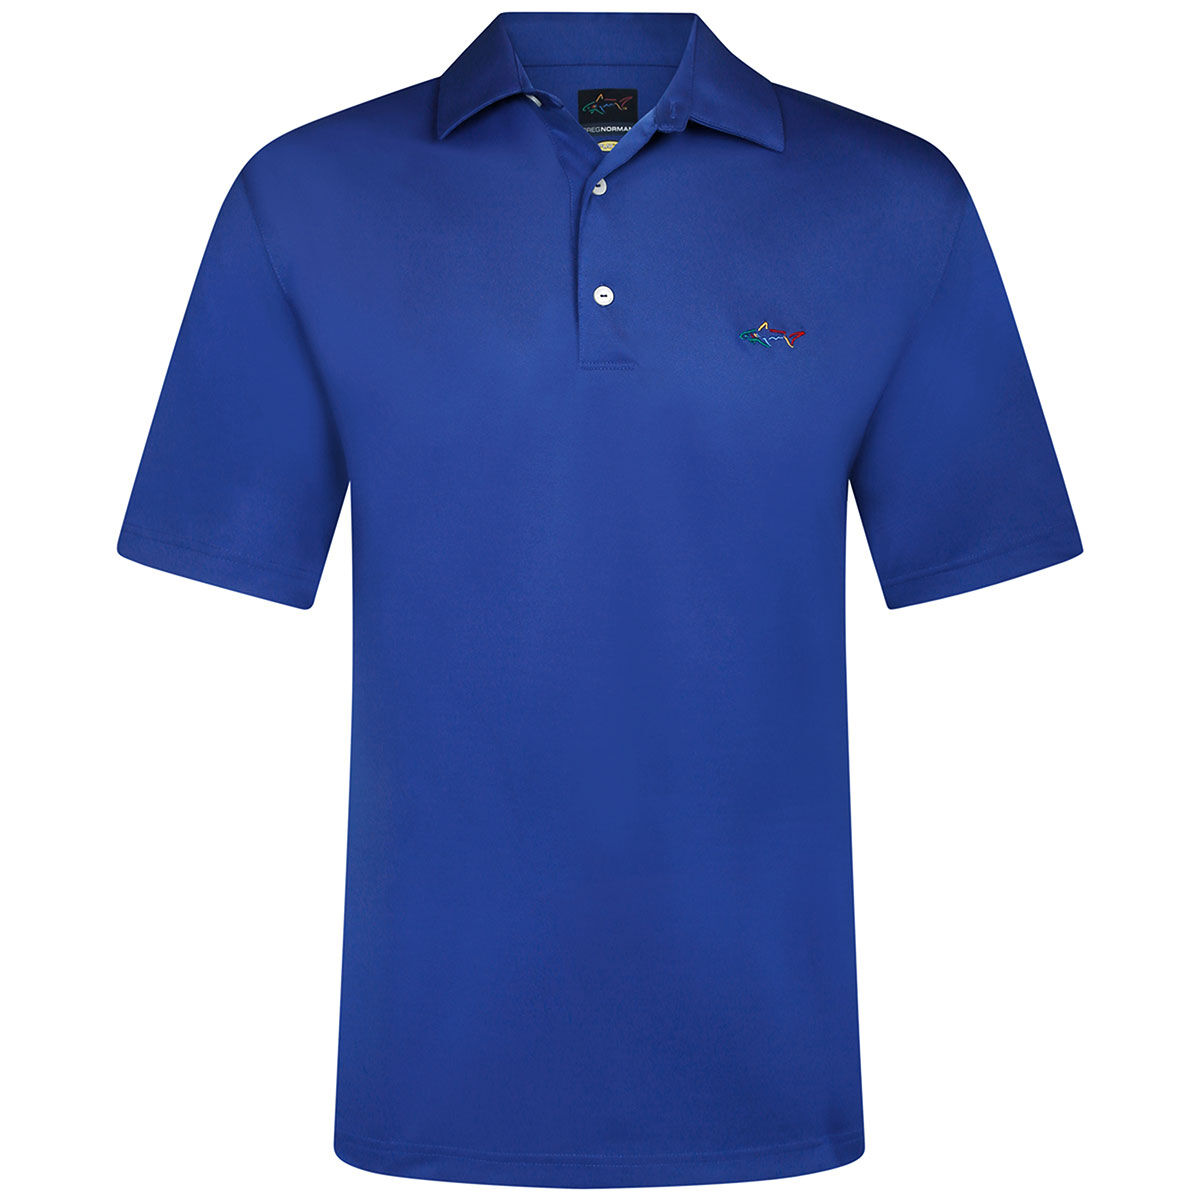 Greg Norman Blue Embroidered Shark Logo Golf Polo Shirt, Mens, Maritime | American Golf, Size: Large